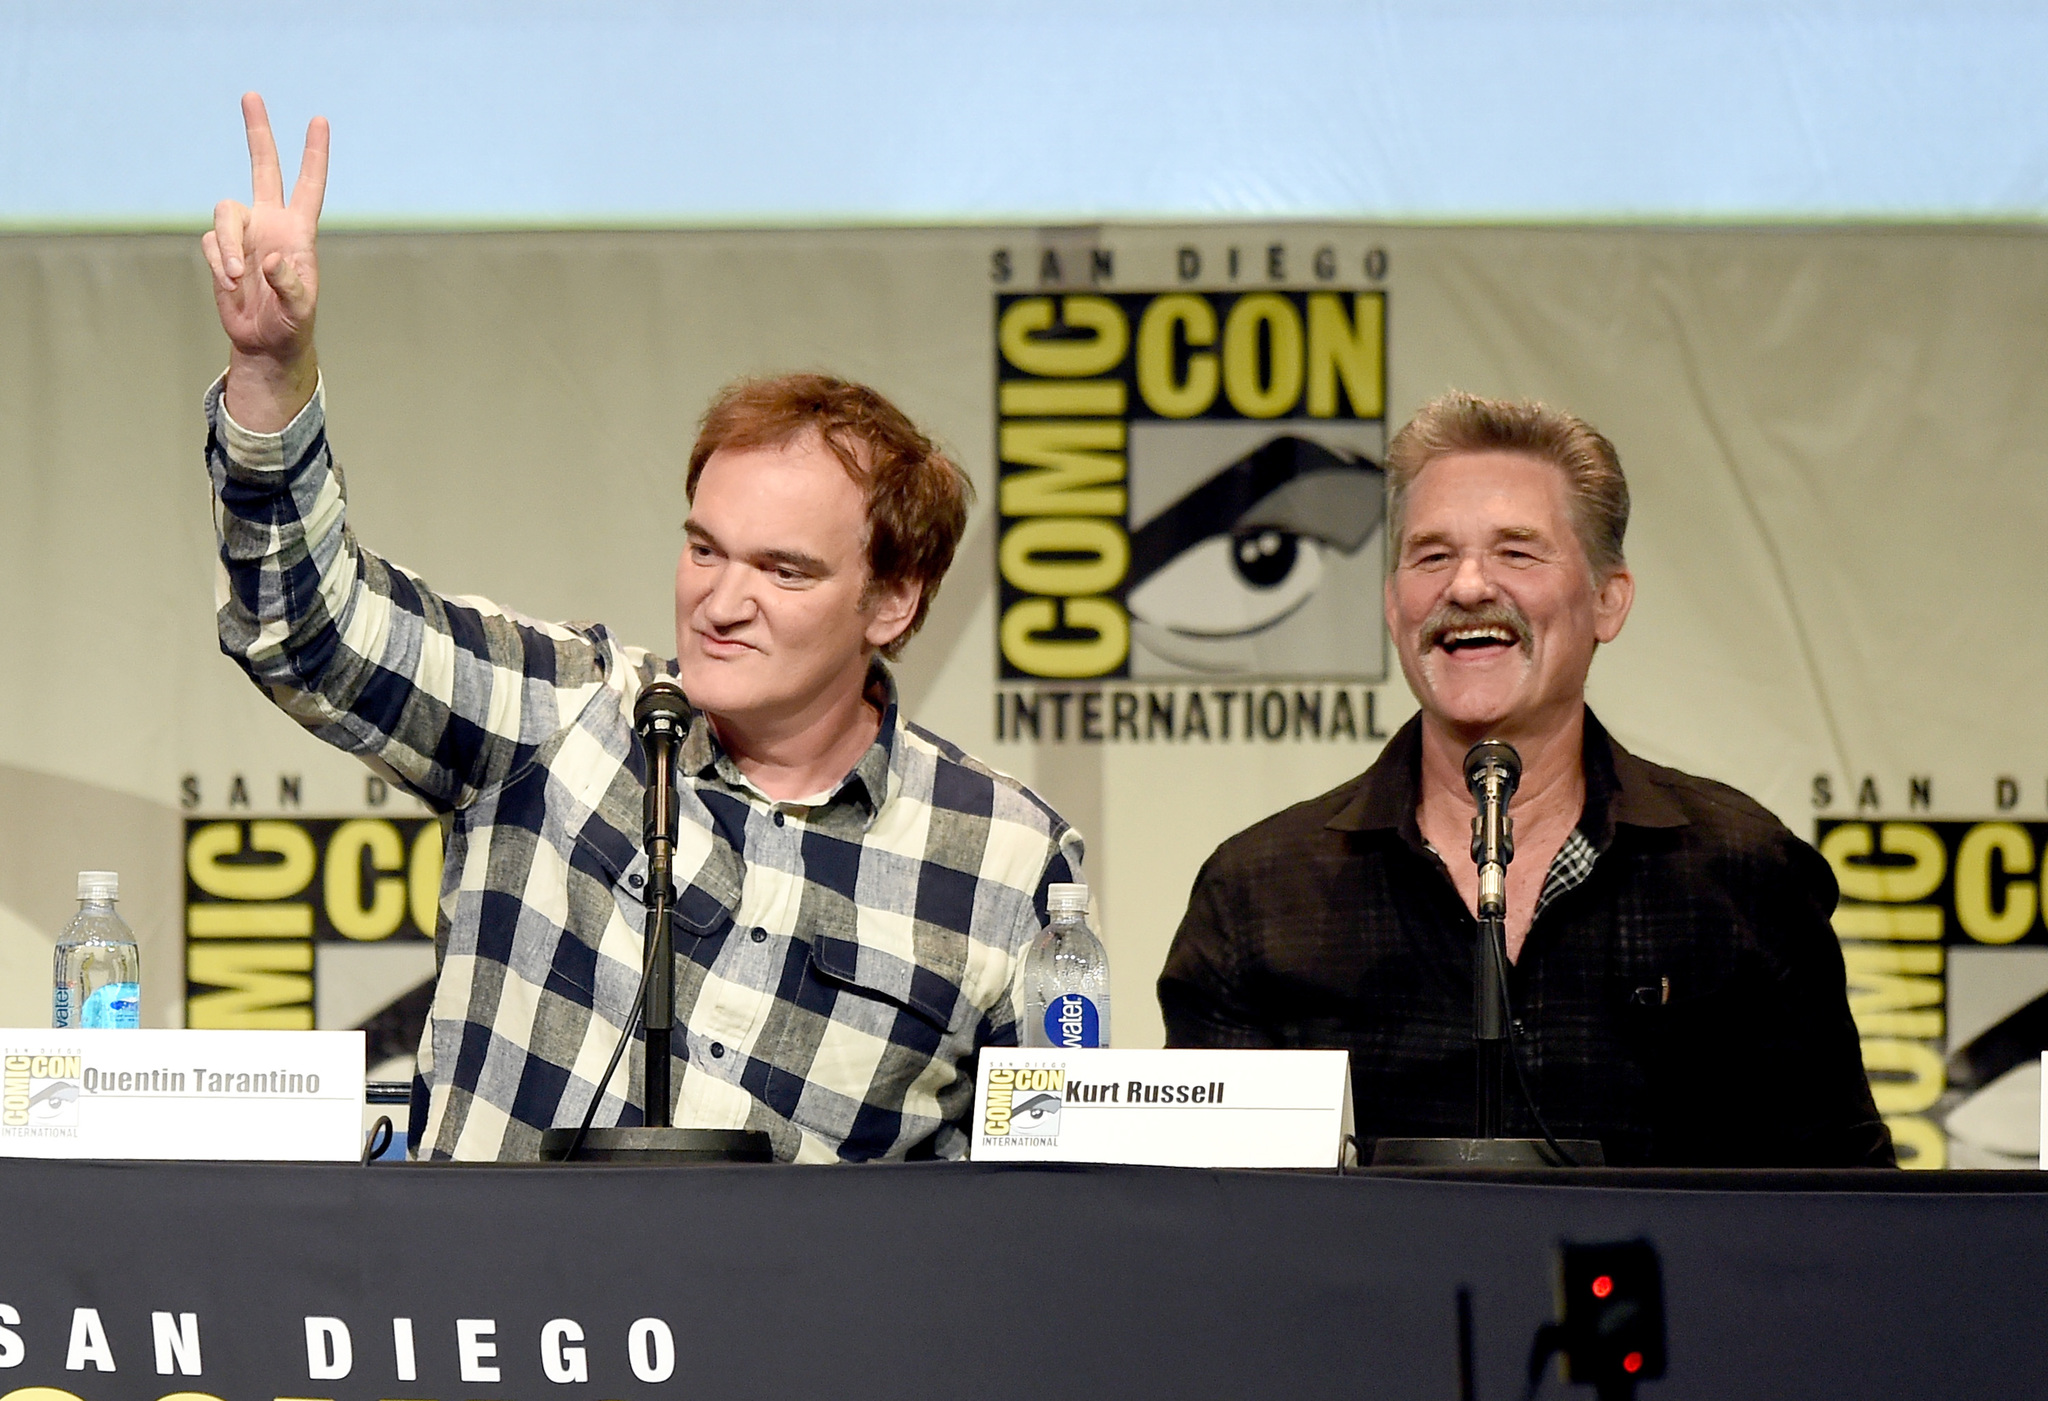 Quentin Tarantino and Kurt Russell at event of Gresmingasis astuonetas (2015)